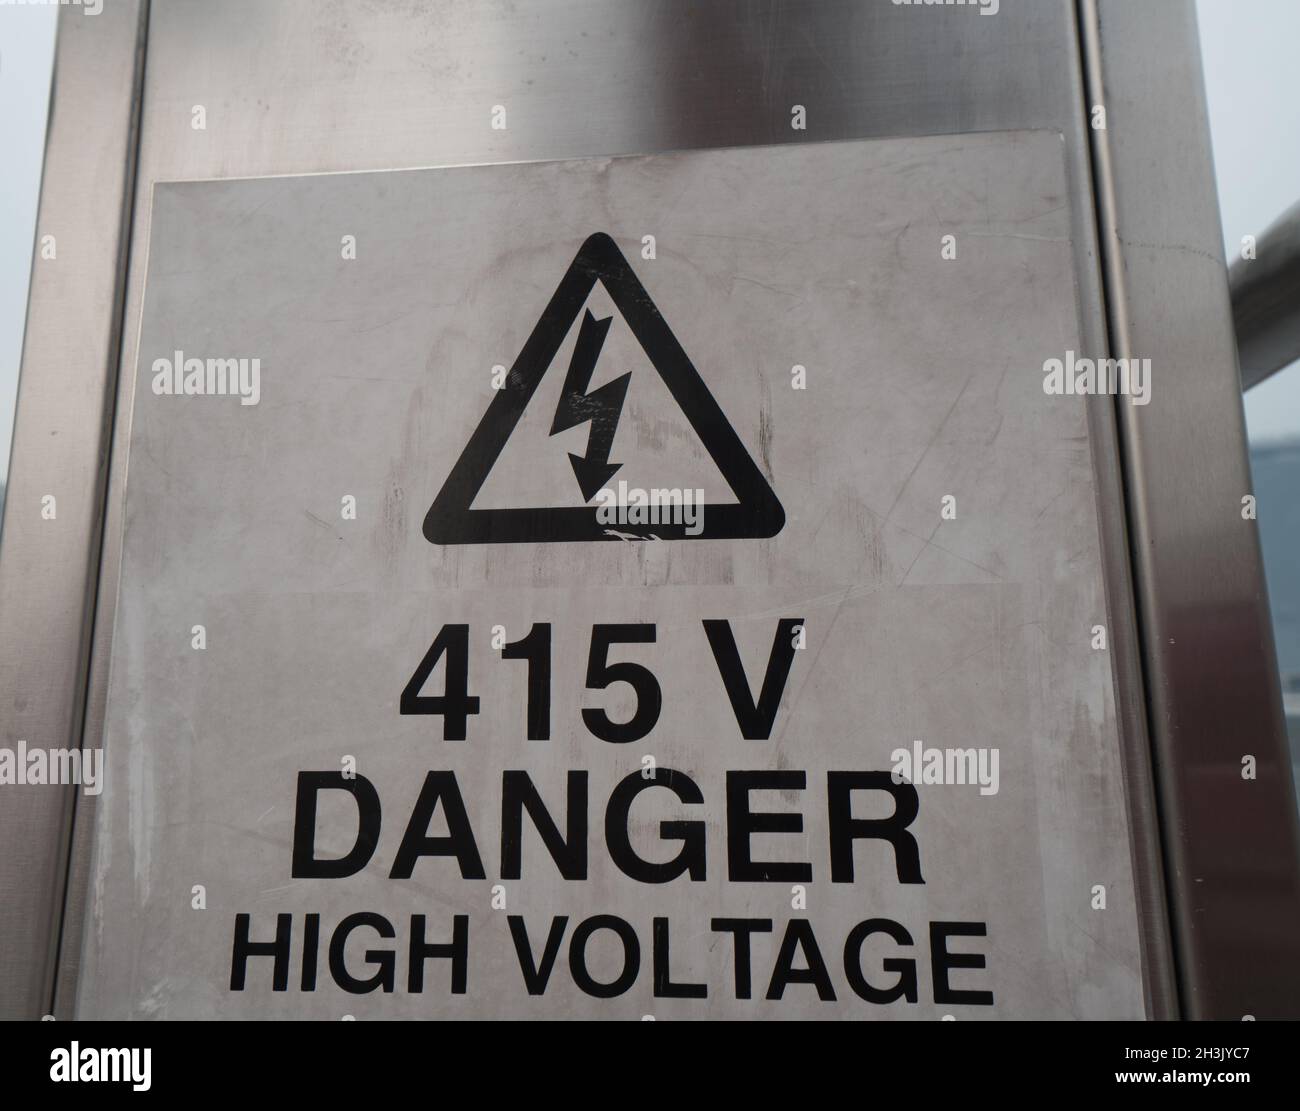 Danger high voltage sign Stock Photo